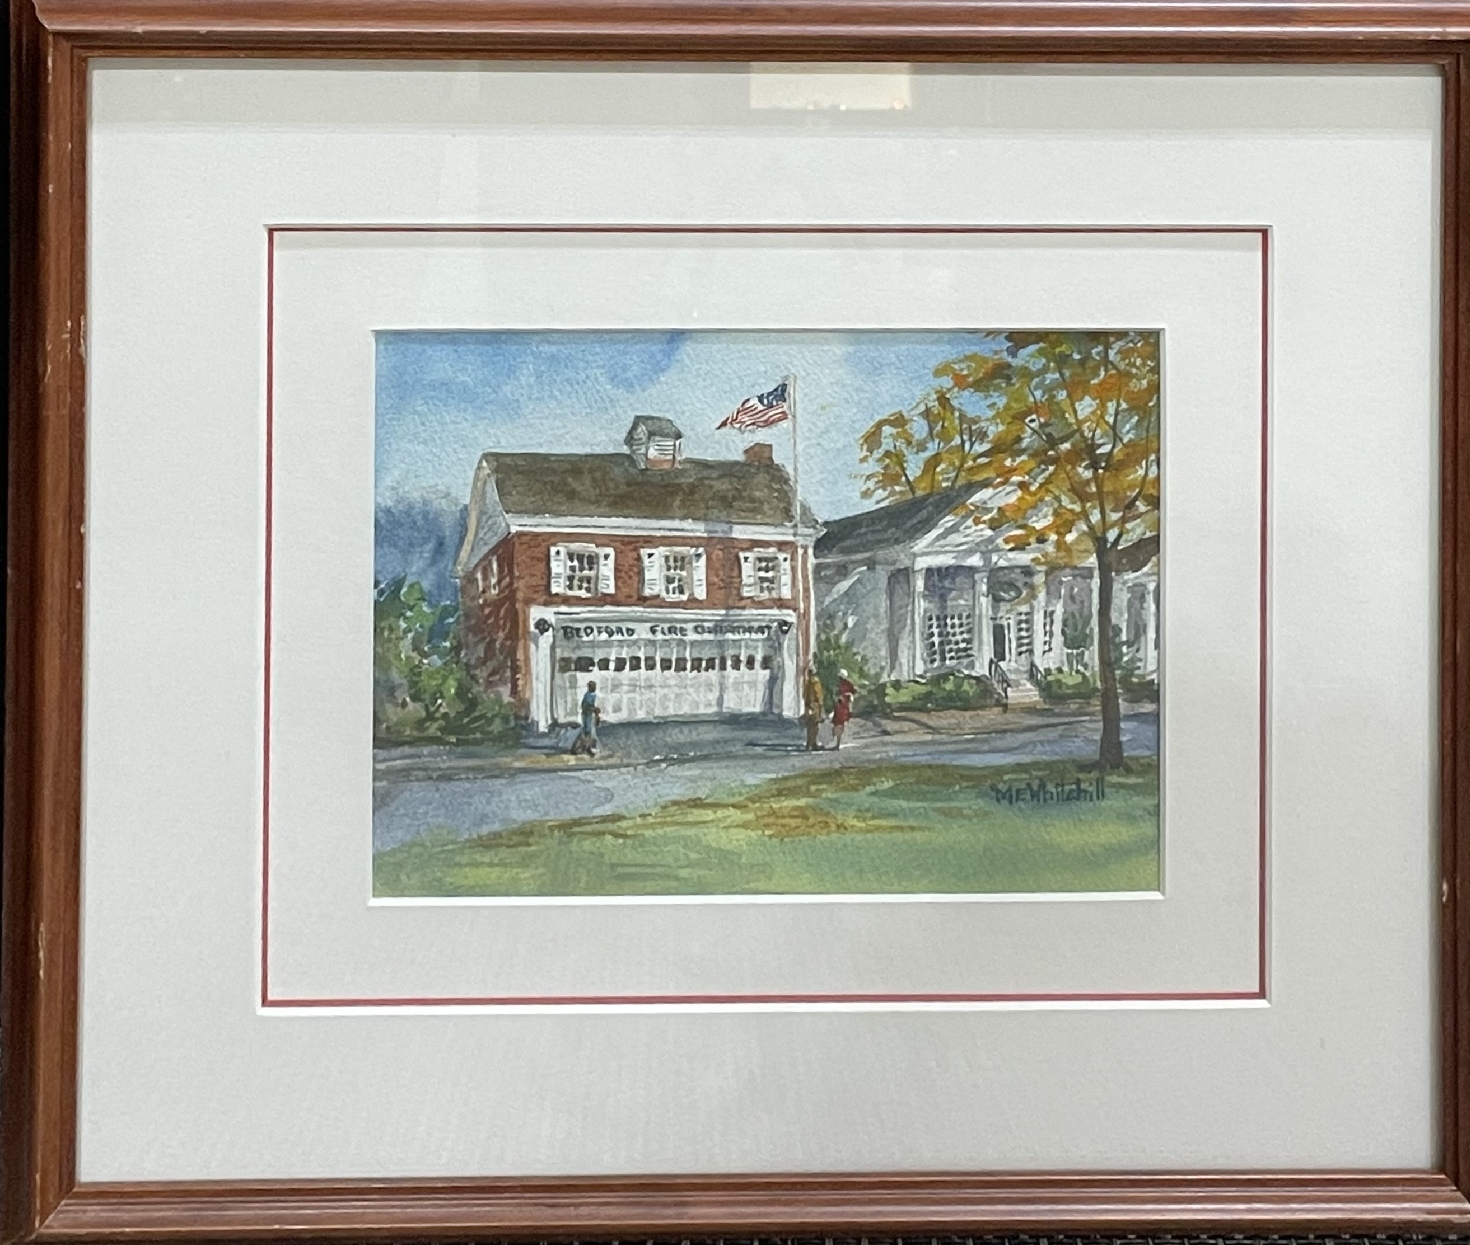 Framed Print of Bedford NY Firehouse
Mary Evelyn Whitehill